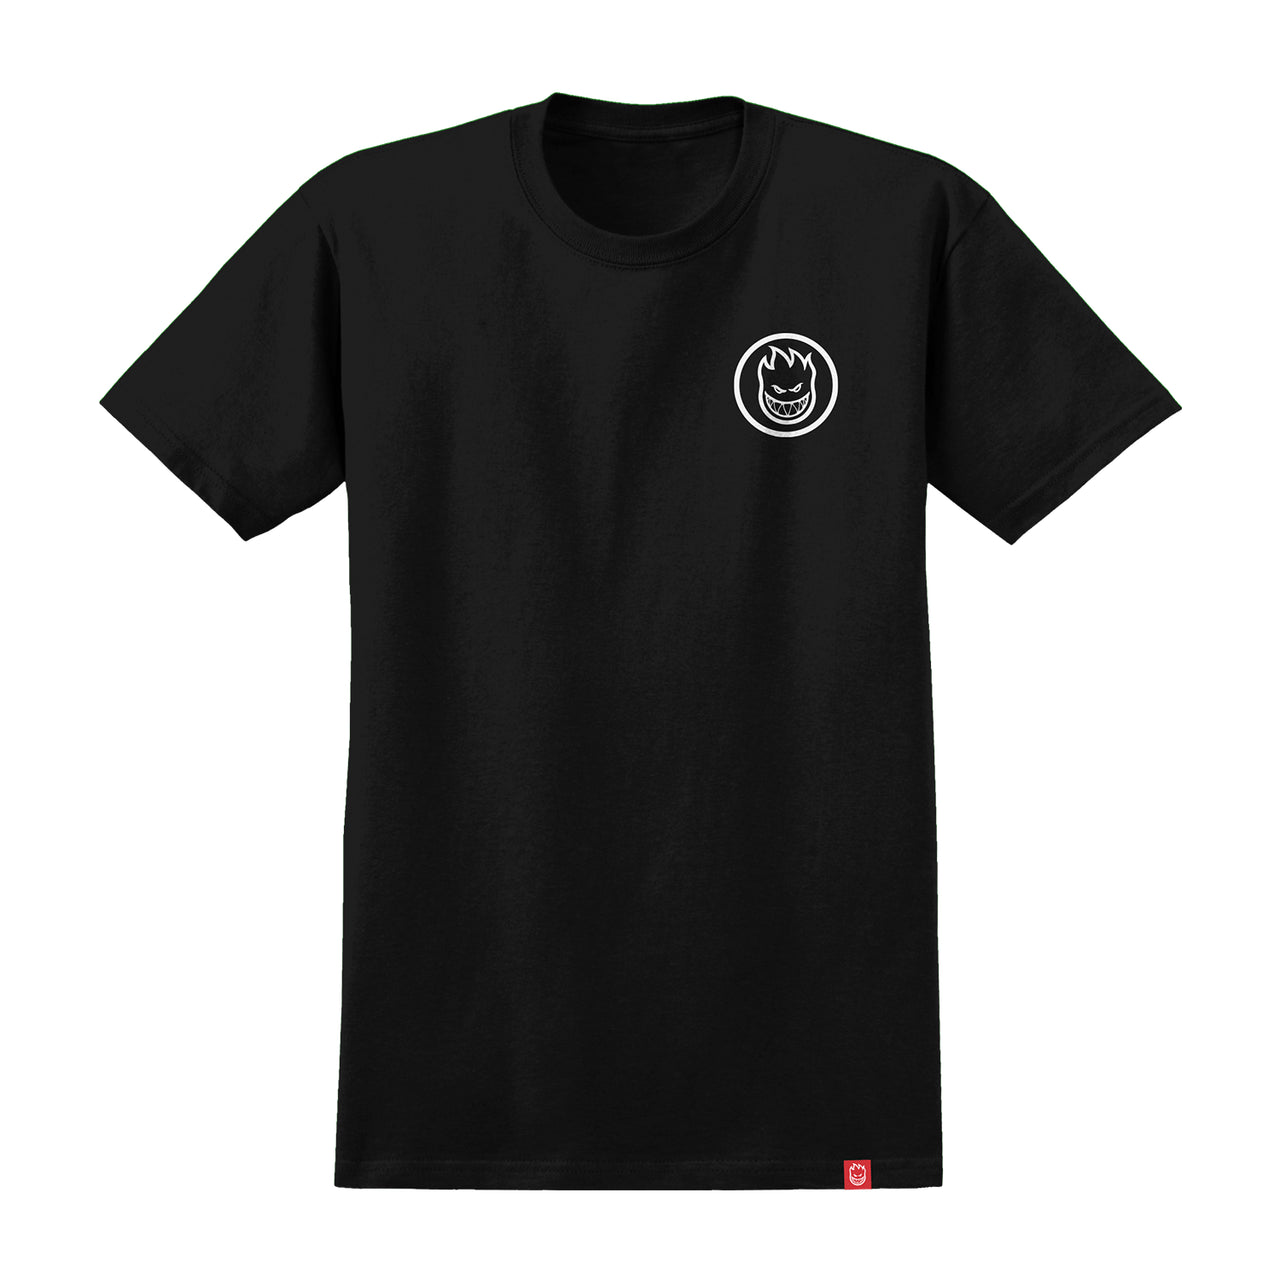 SPITFIRE Classic Swirl T-Shirt Black/White Prints Men's Short Sleeve T-Shirts Spitfire 